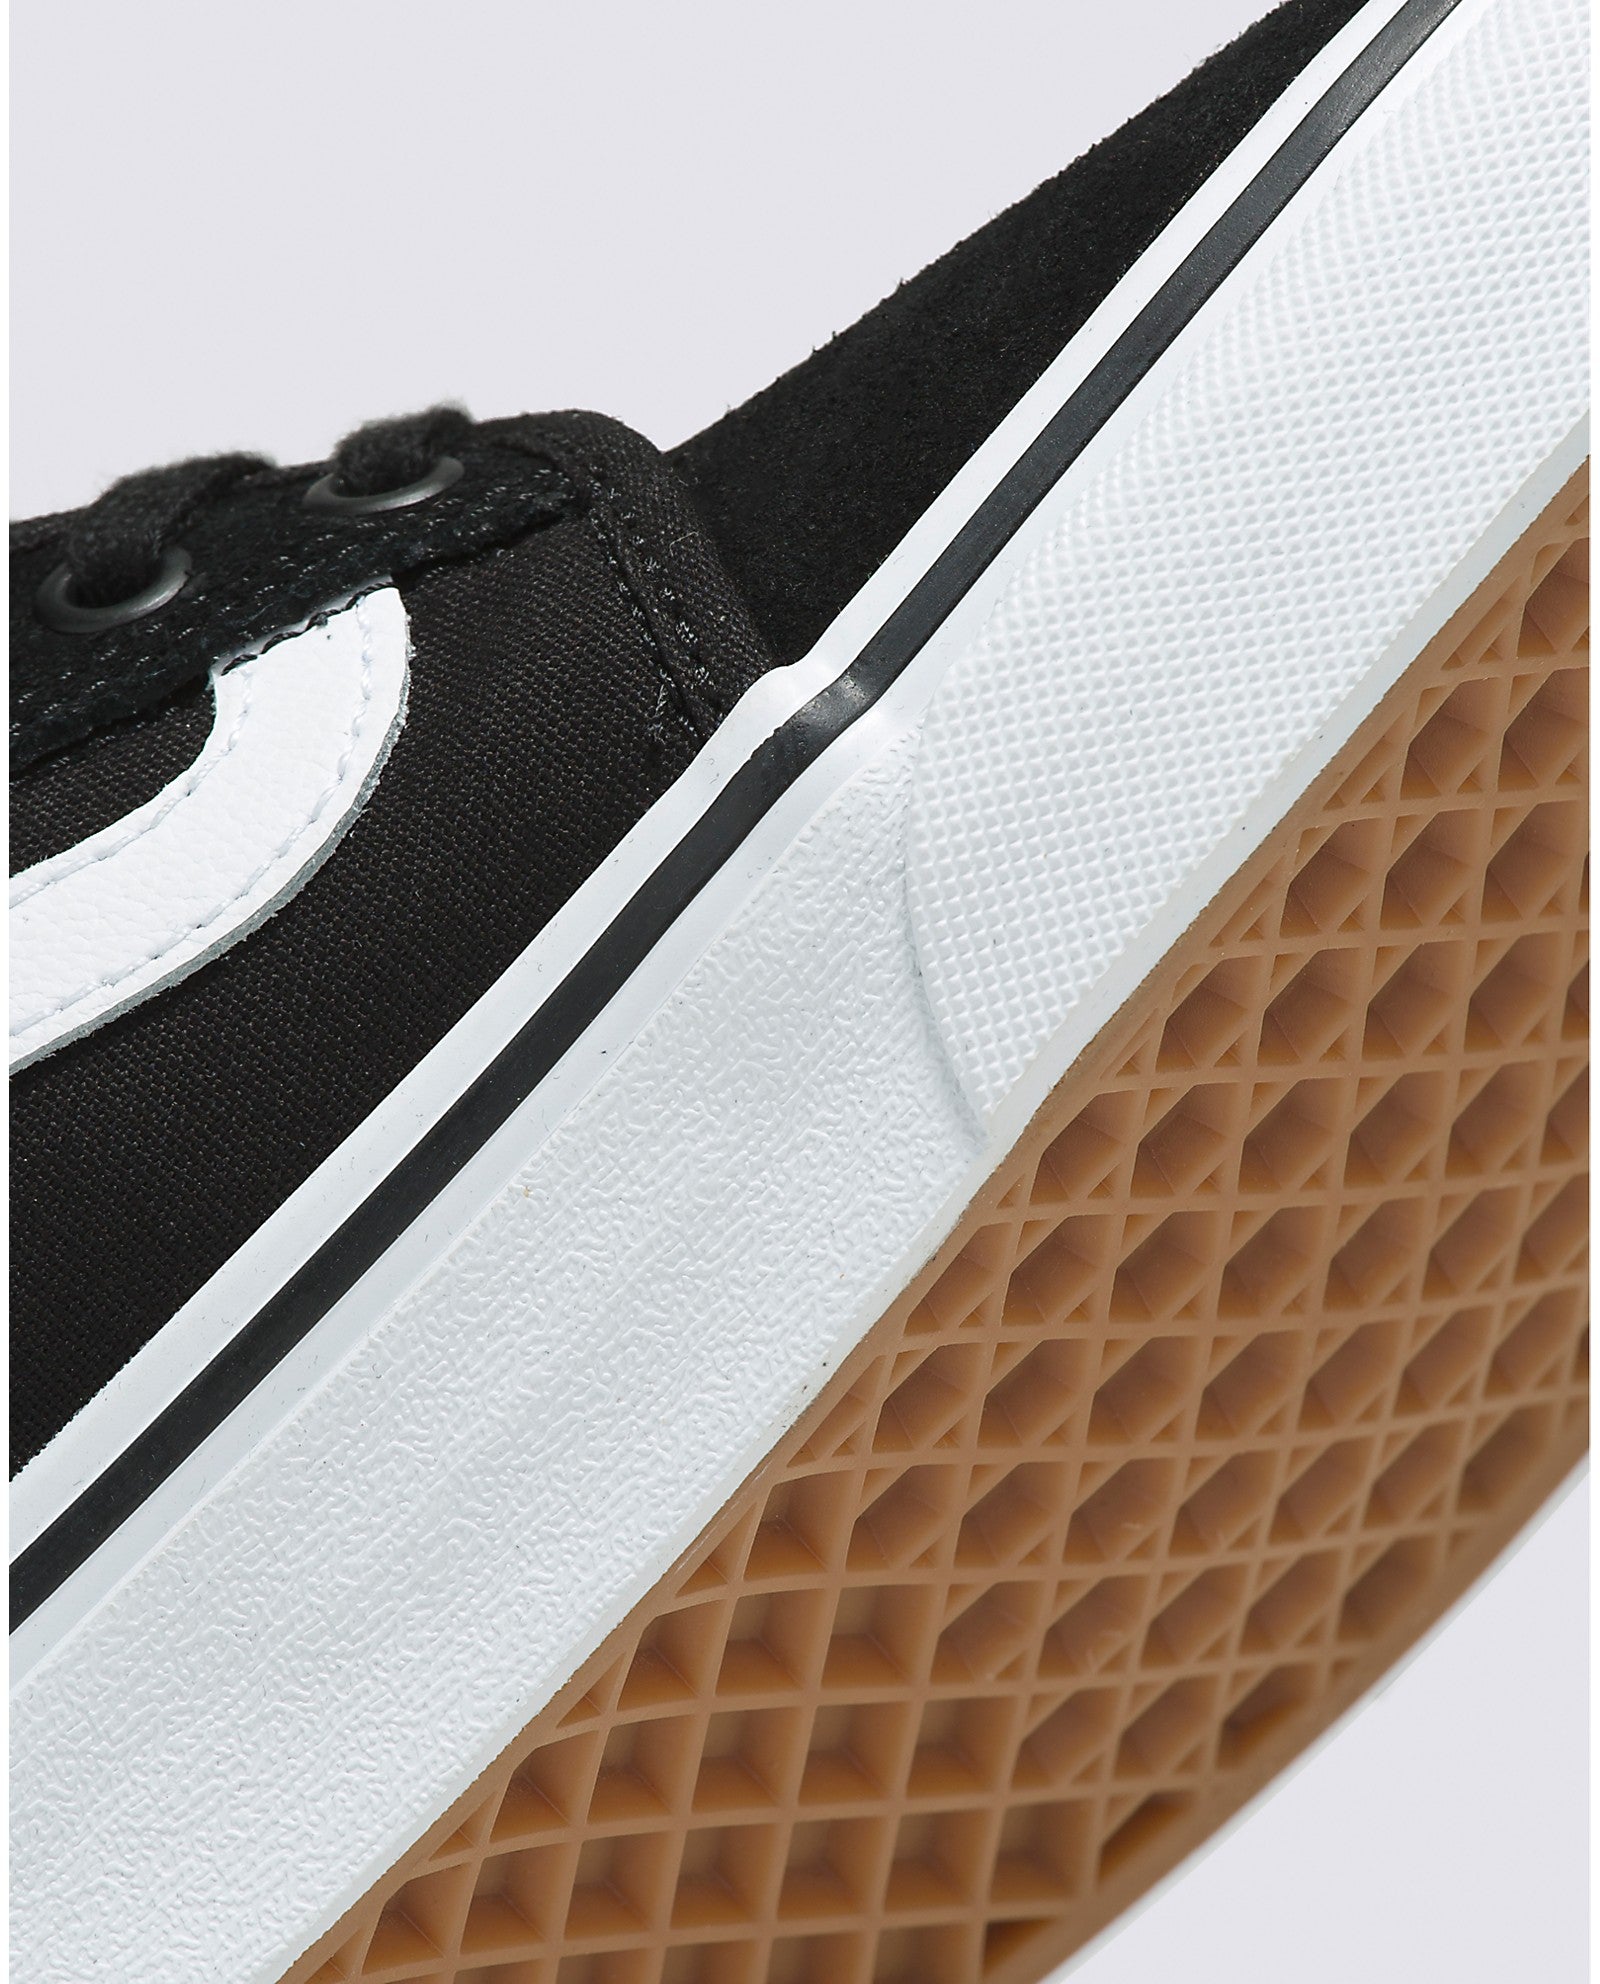 Black/White Chukka Low Sidestripe Vans Skateboard Shoe Detail